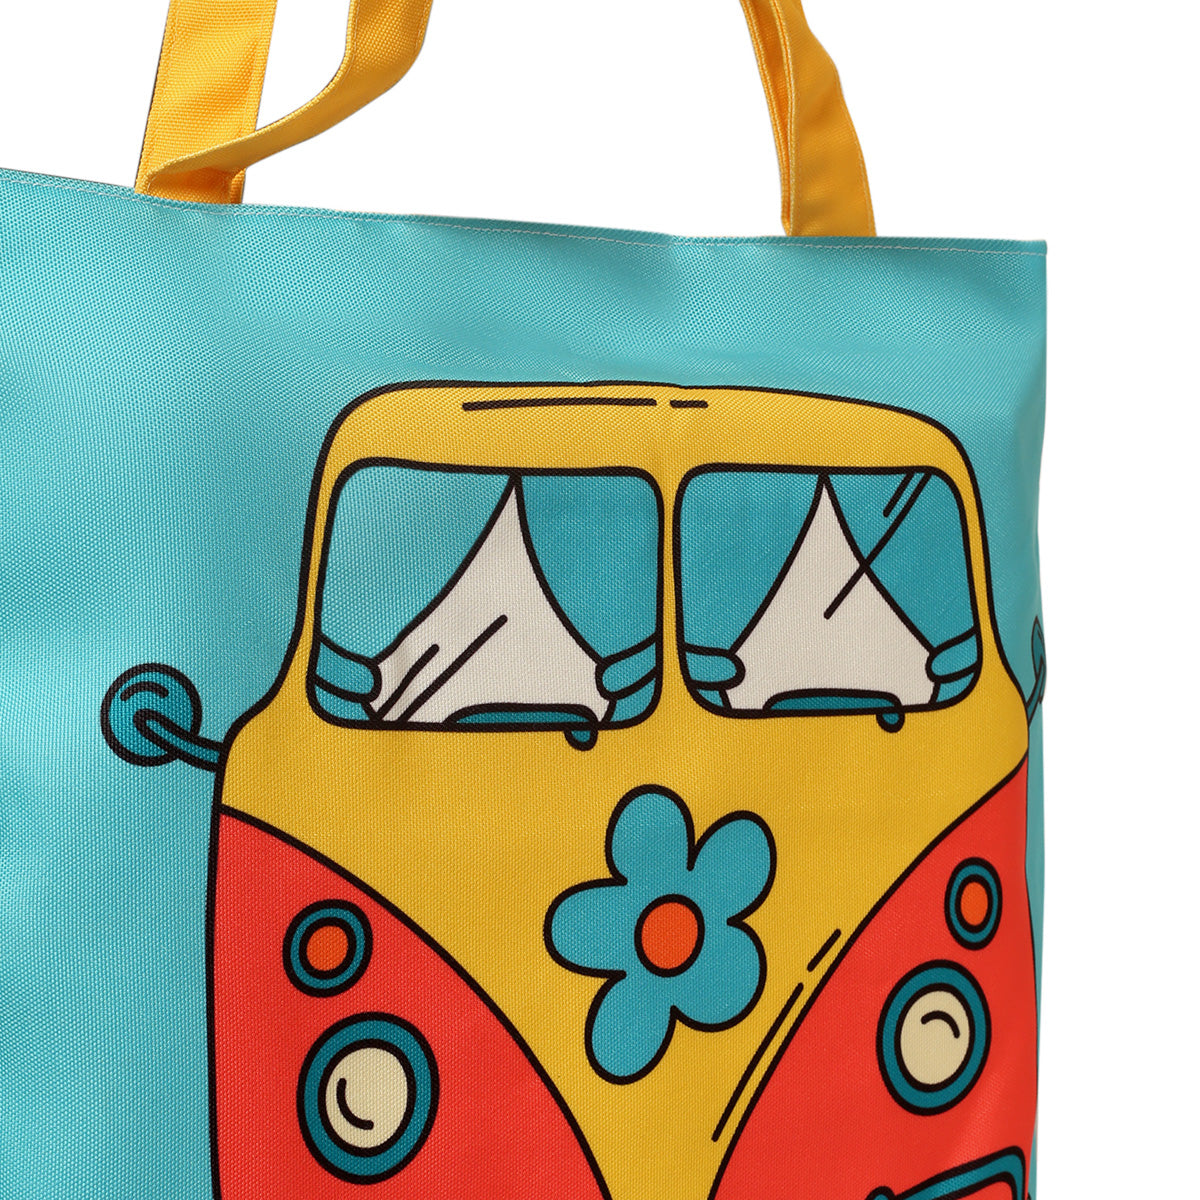 Colorful tote bag with cartoon van design